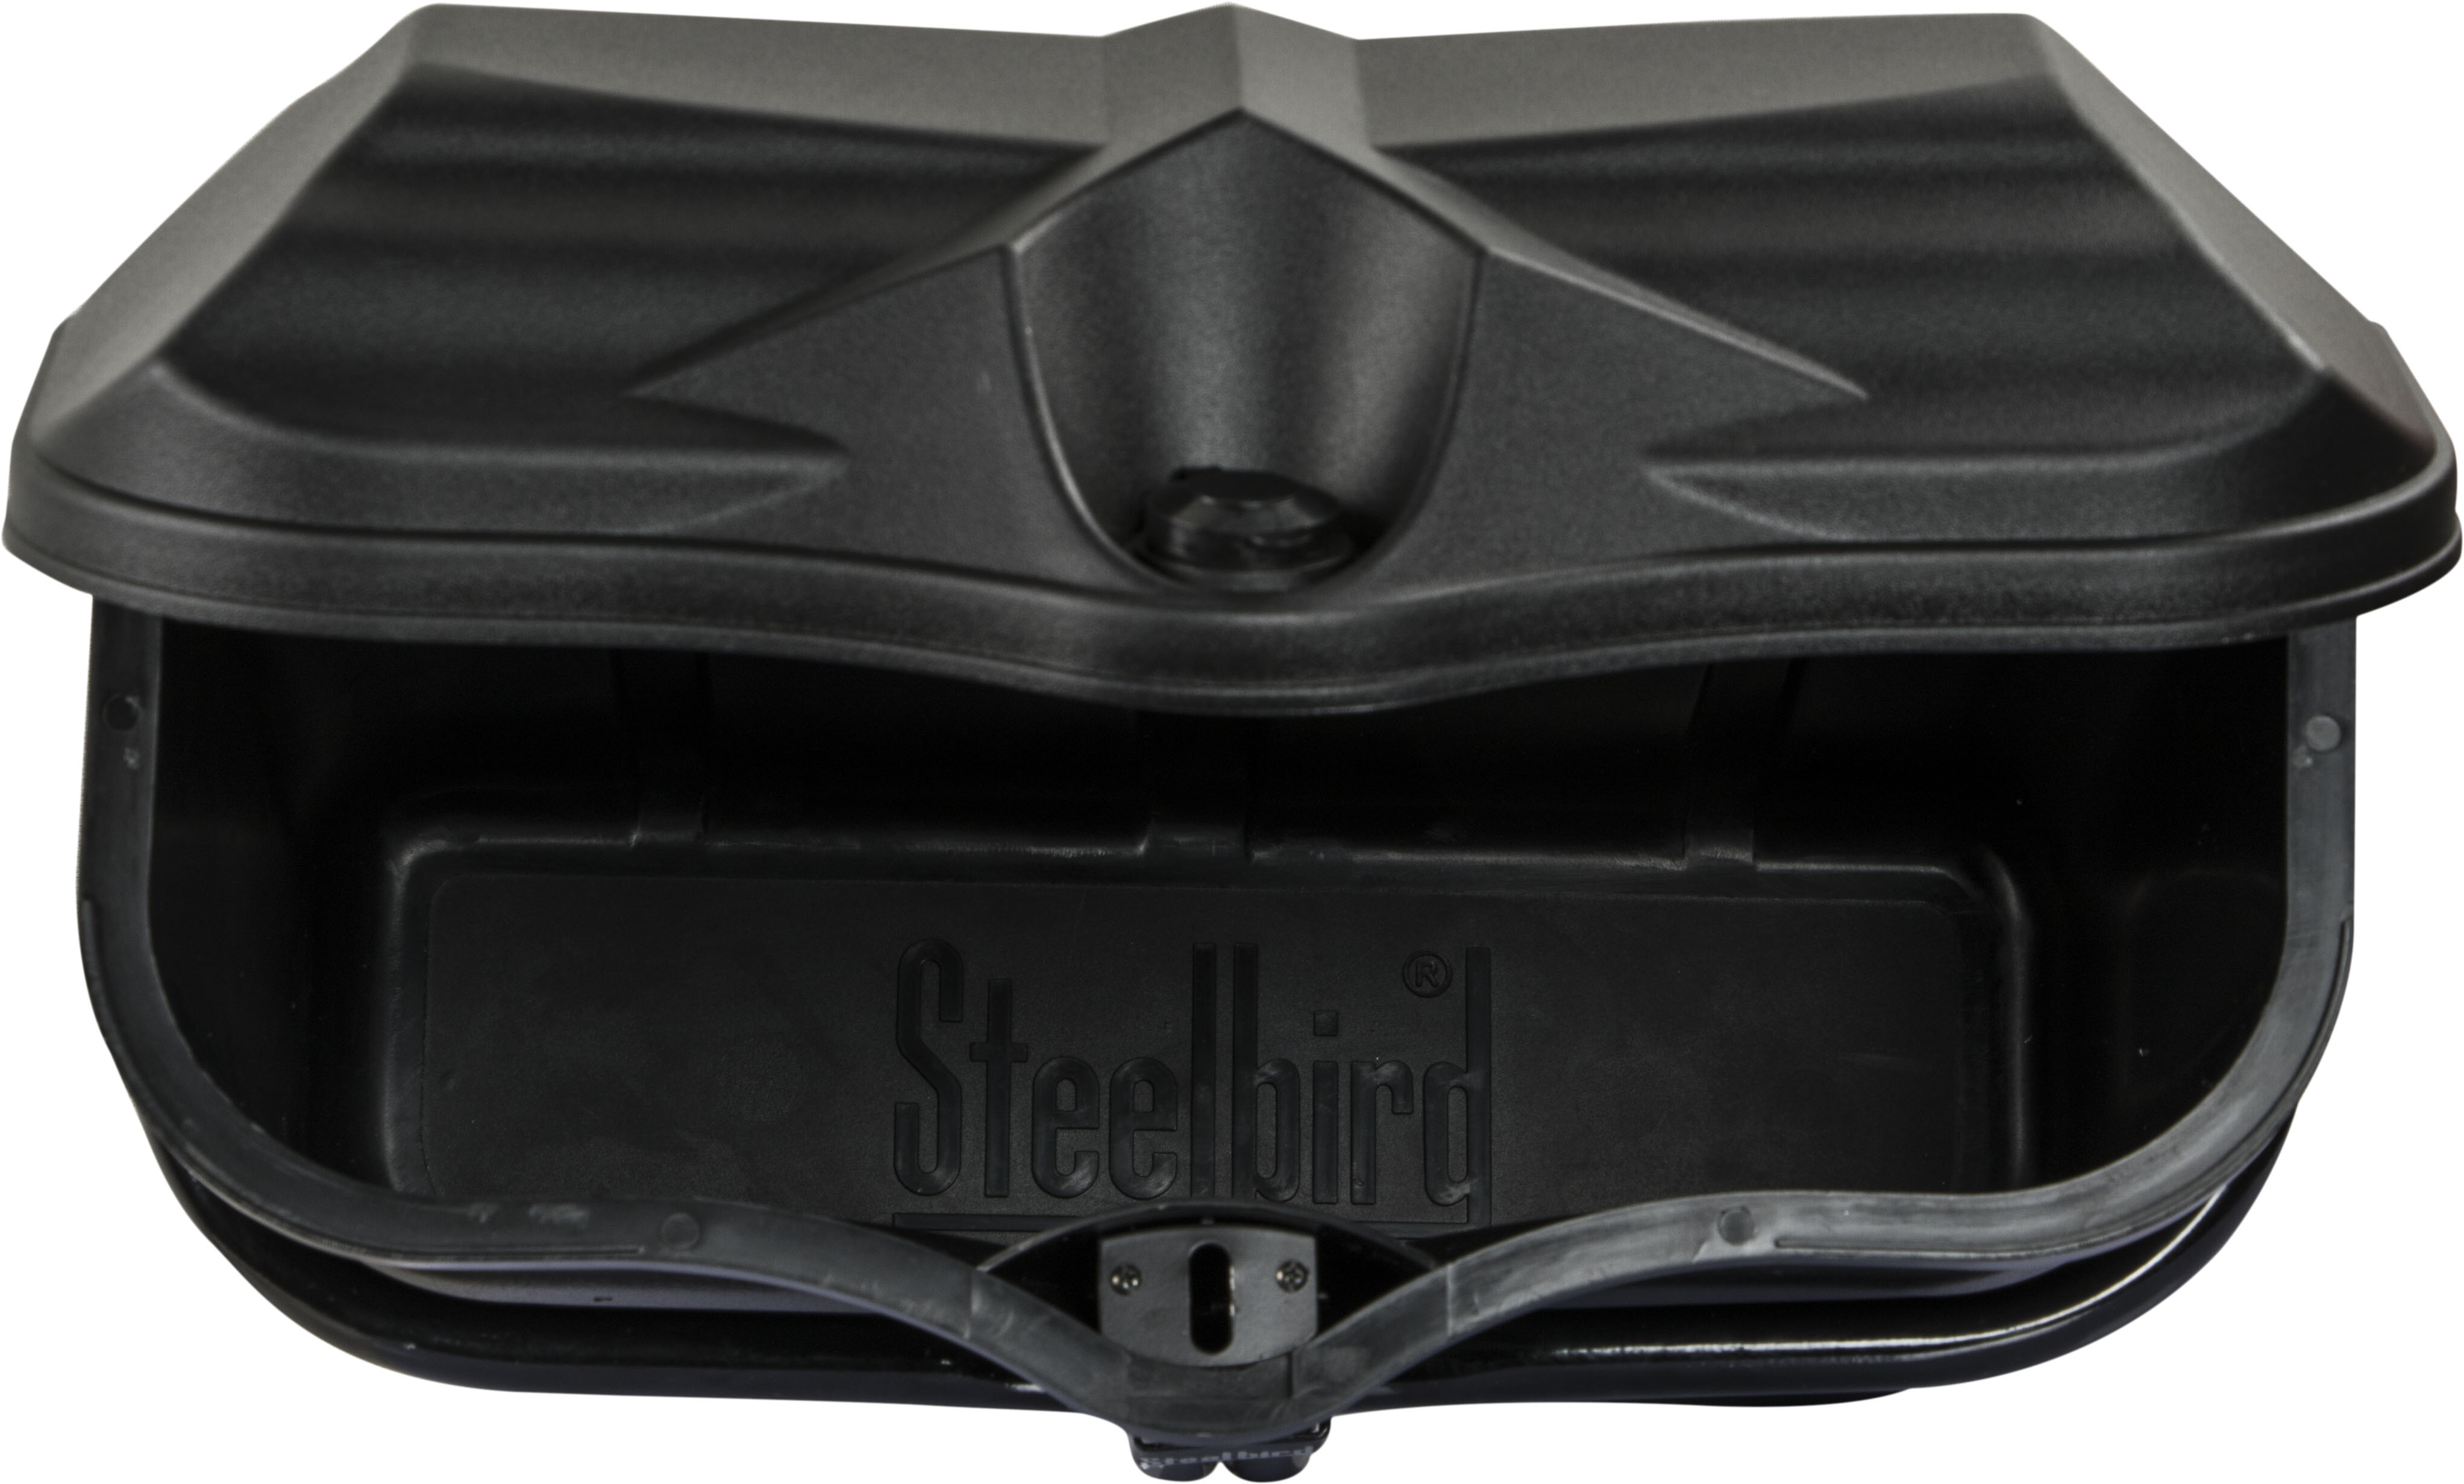 Steelbird Pannier Box SB-515